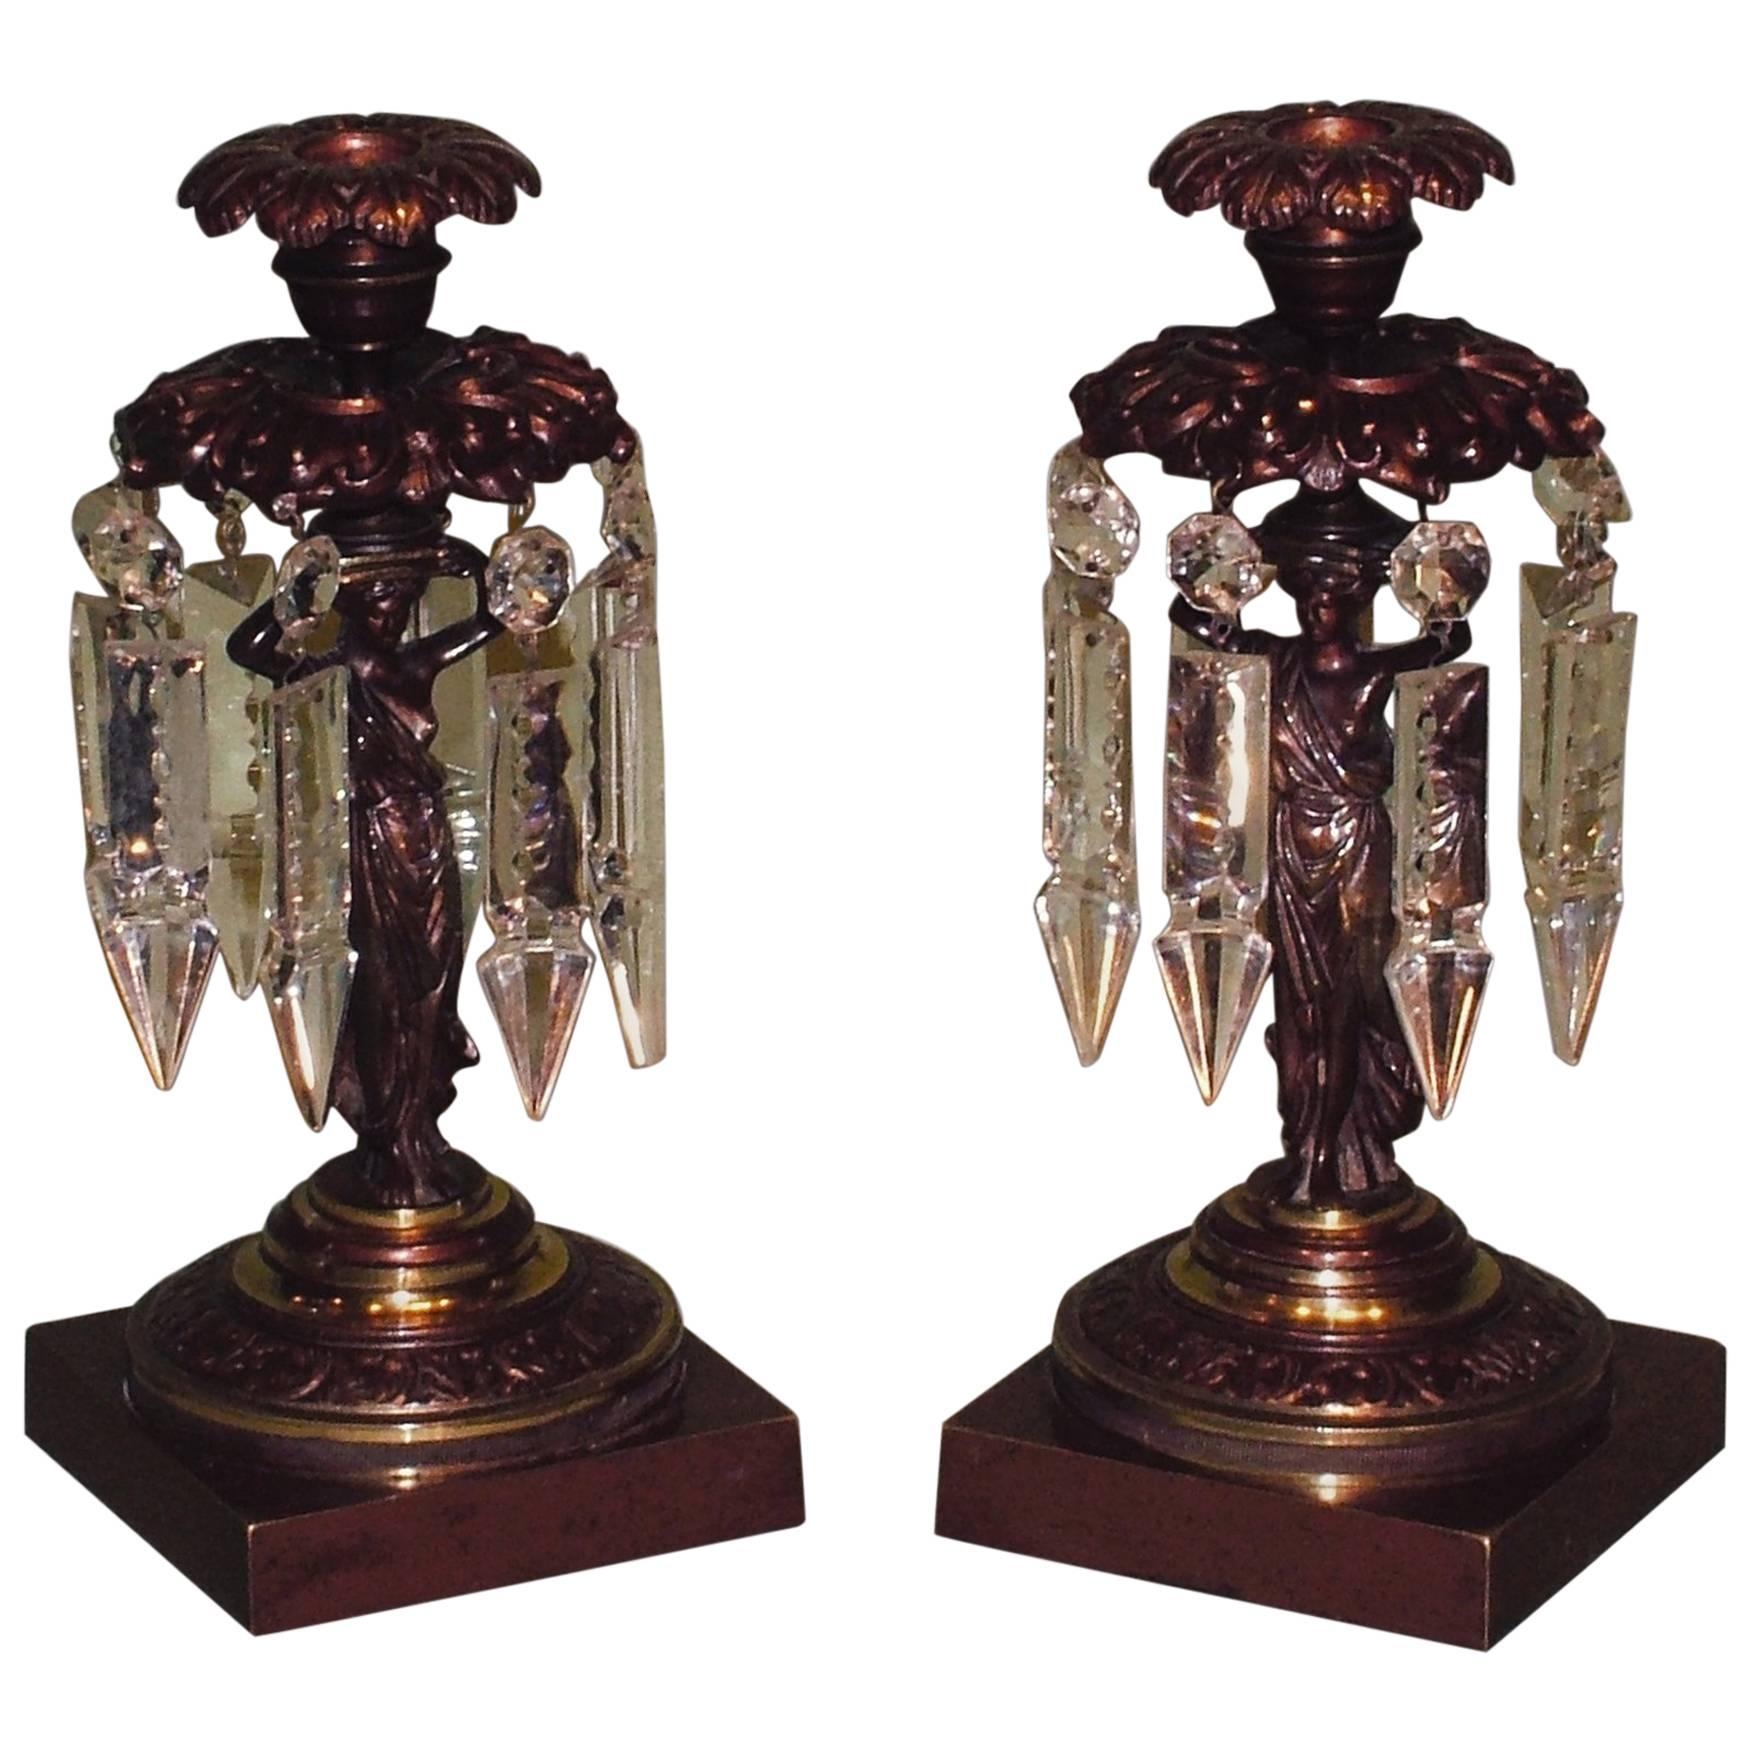 Regency bronze and ormolu classical lady lustre candlesticks